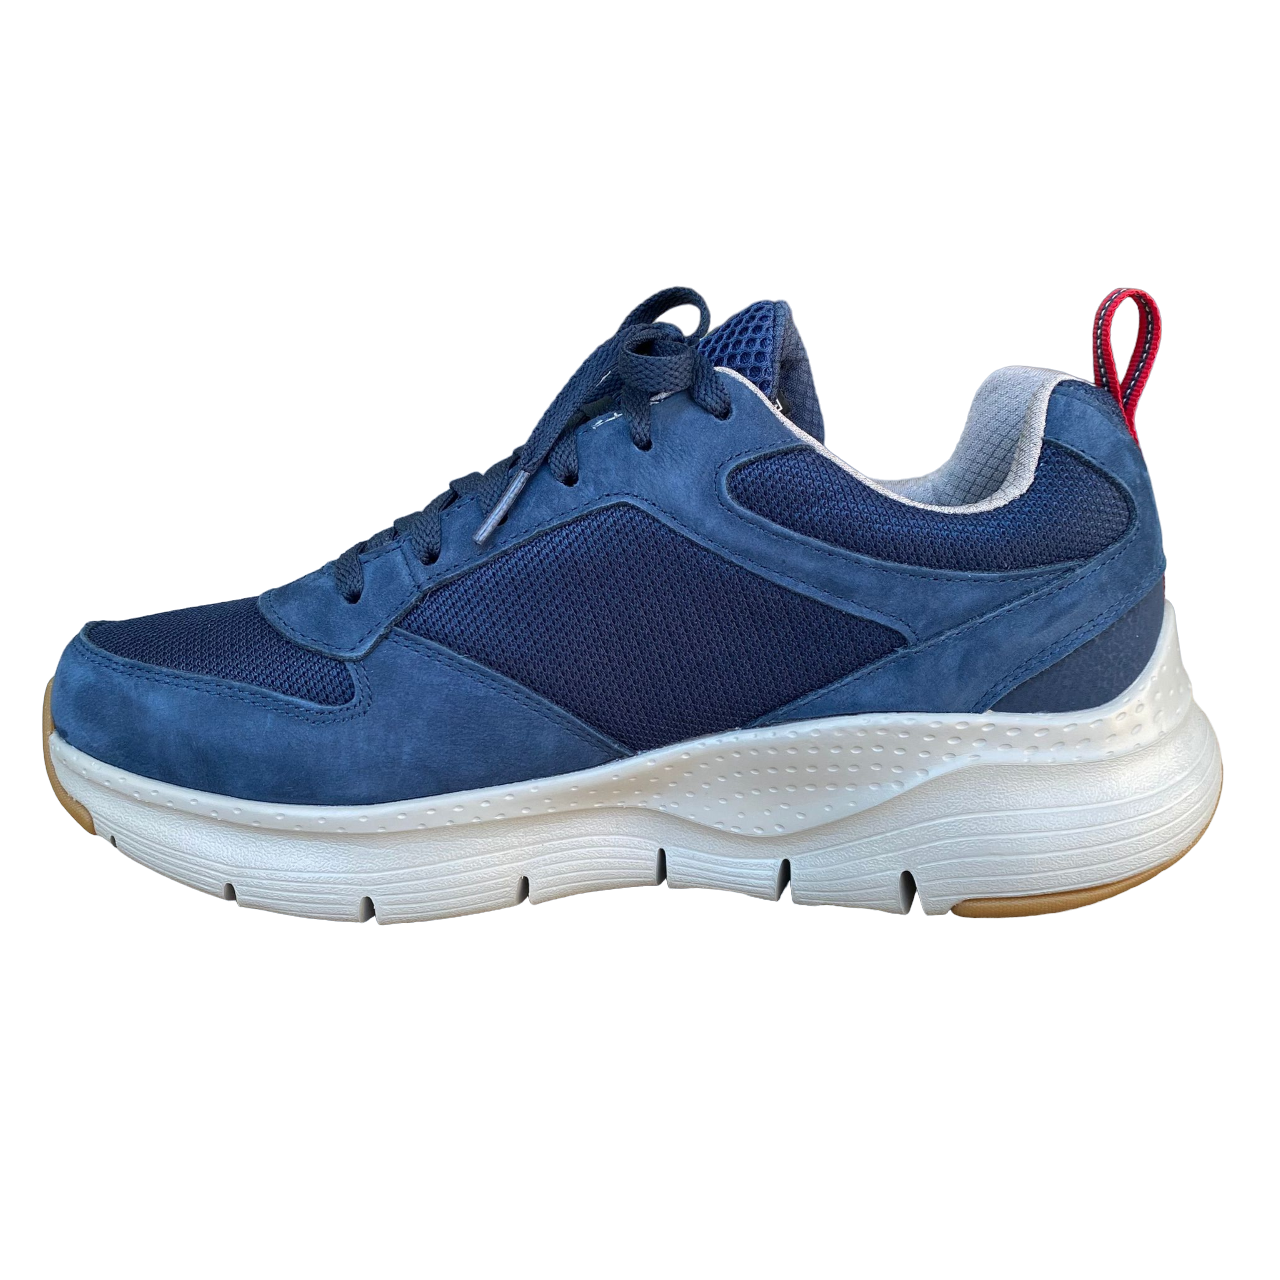 Skechers scarpa sneakers da uomo impermeabile Arch Fit Render 232500/NVY blu